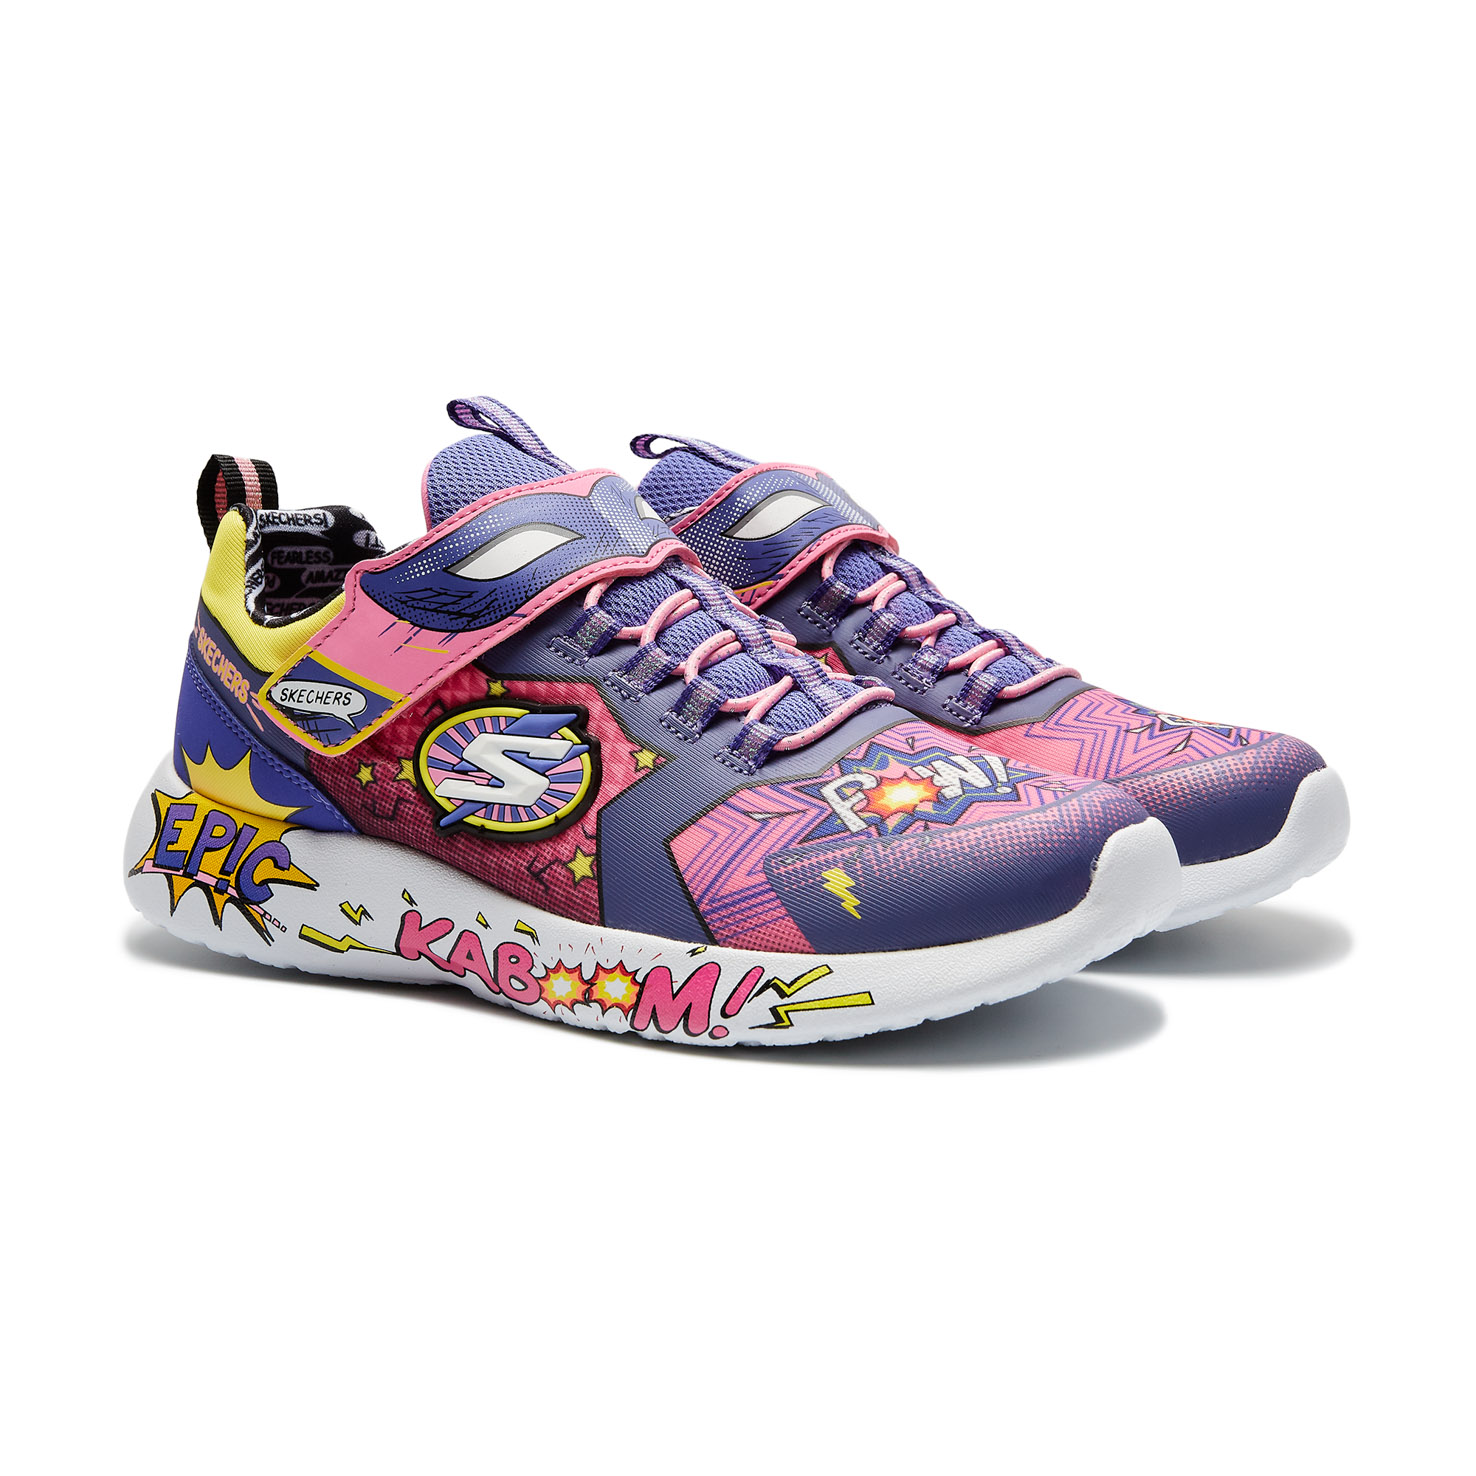 DYNAMIGHT HERO STATUS Kids' low shoes SKECHERS, размер 30, цвет розовый SK302204L - фото 2